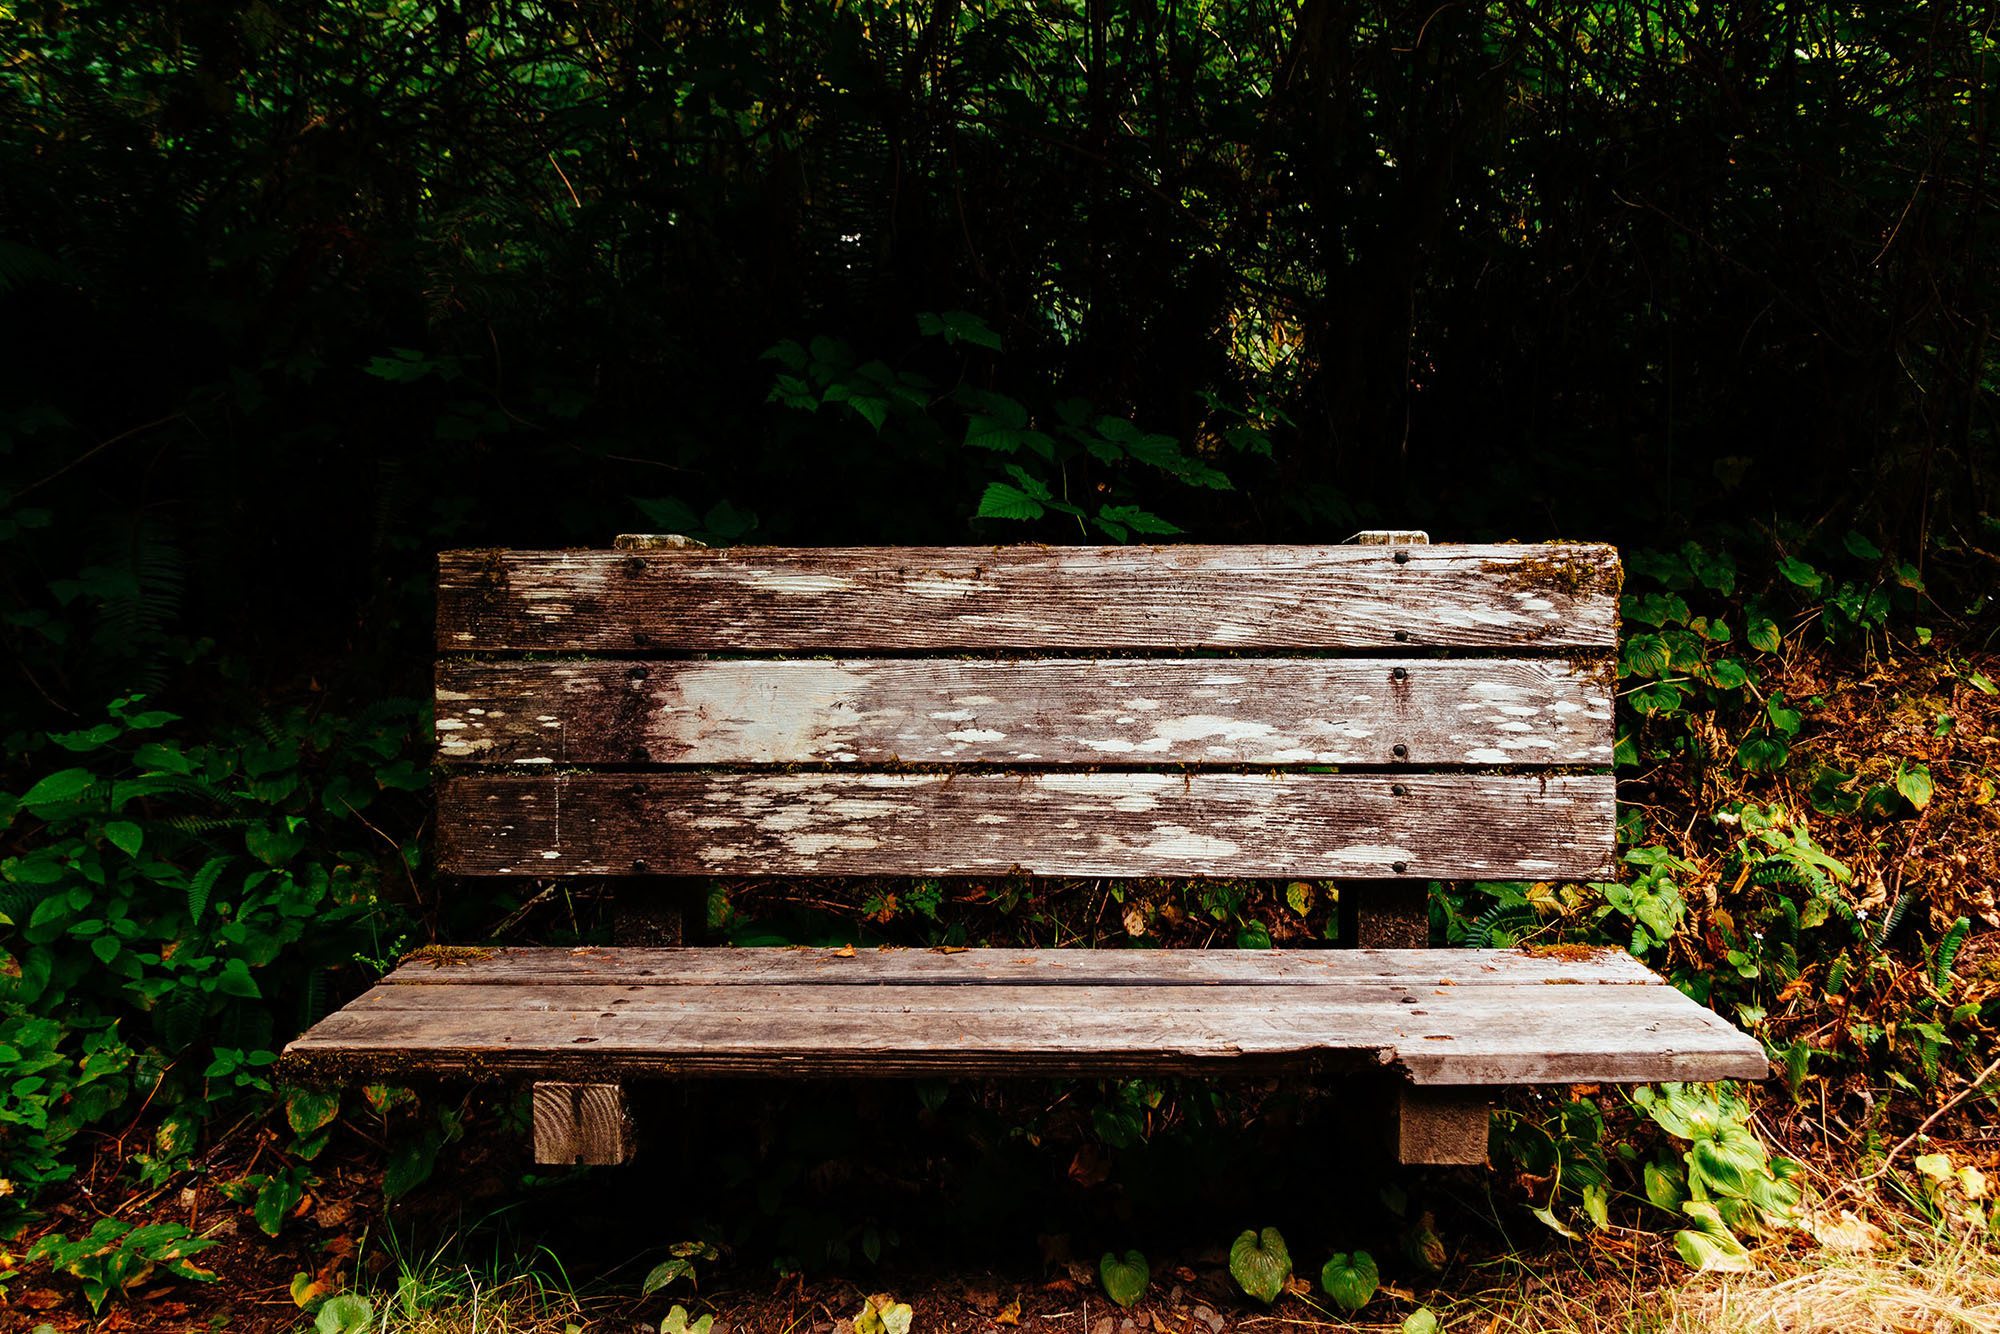 A rustic park bench